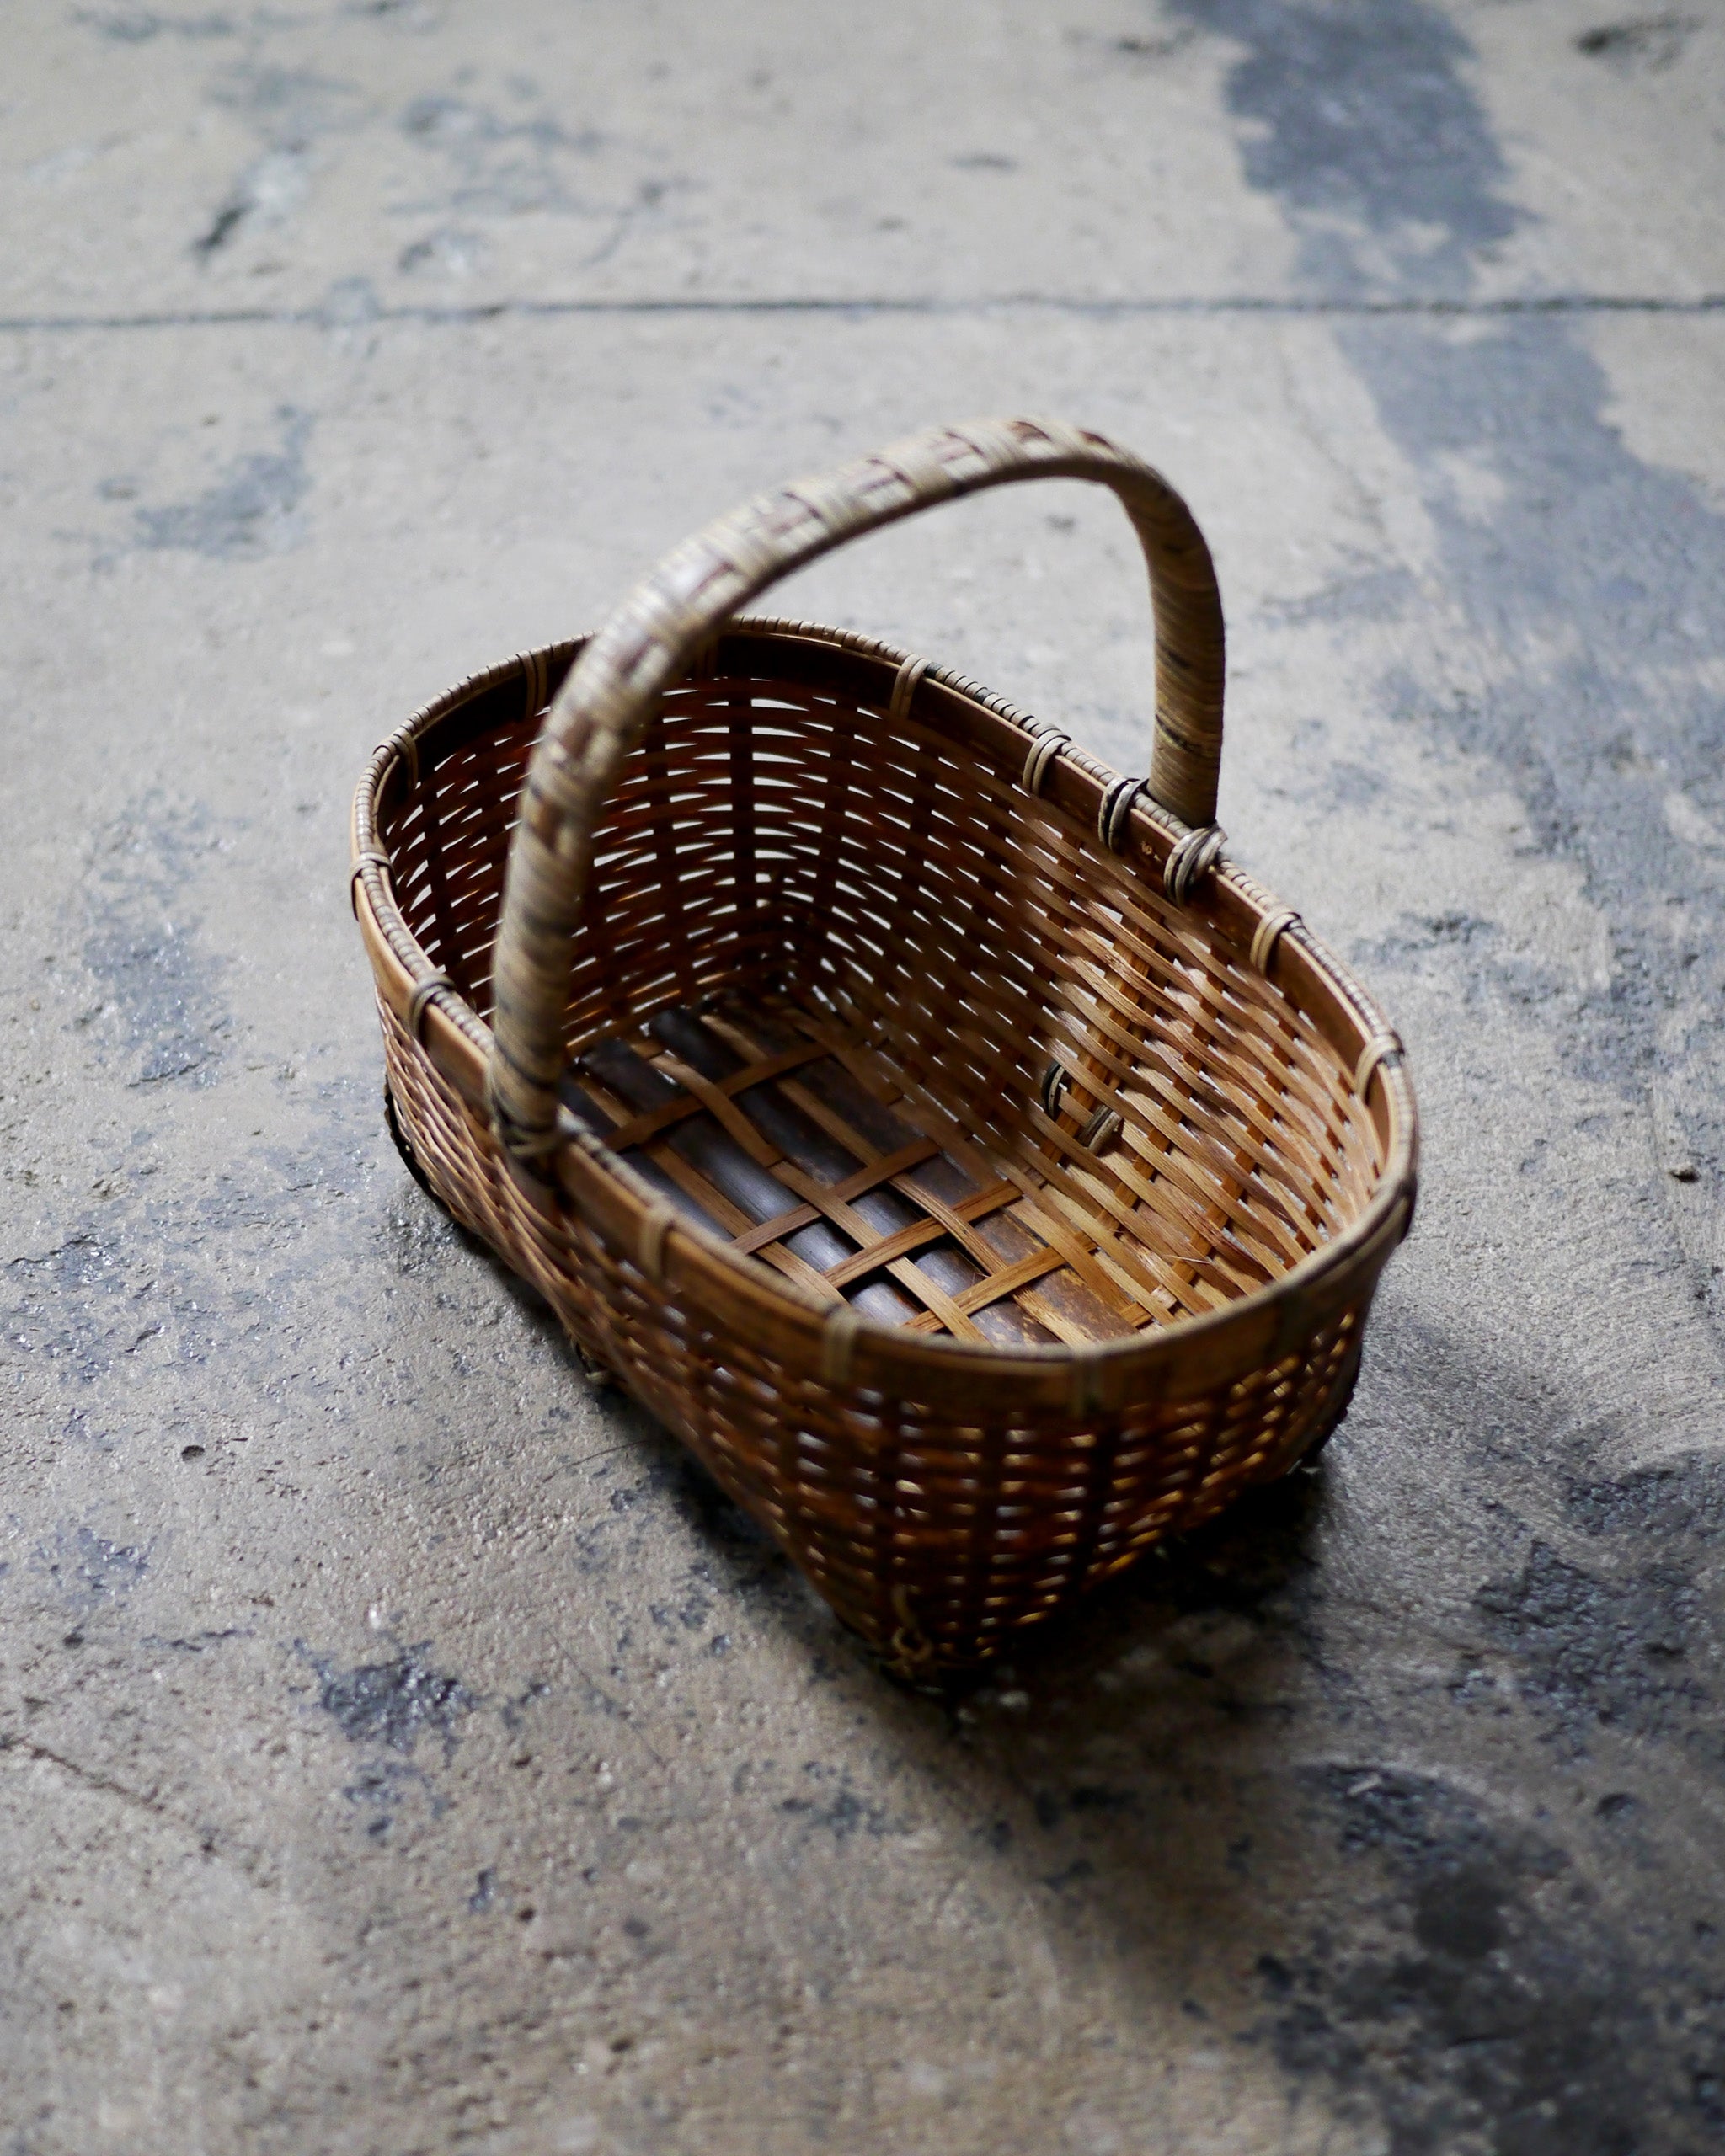 Bird's-eye-view of small toradake bread basket with handle by Kohchosai Kosuga on dark concrete floor.